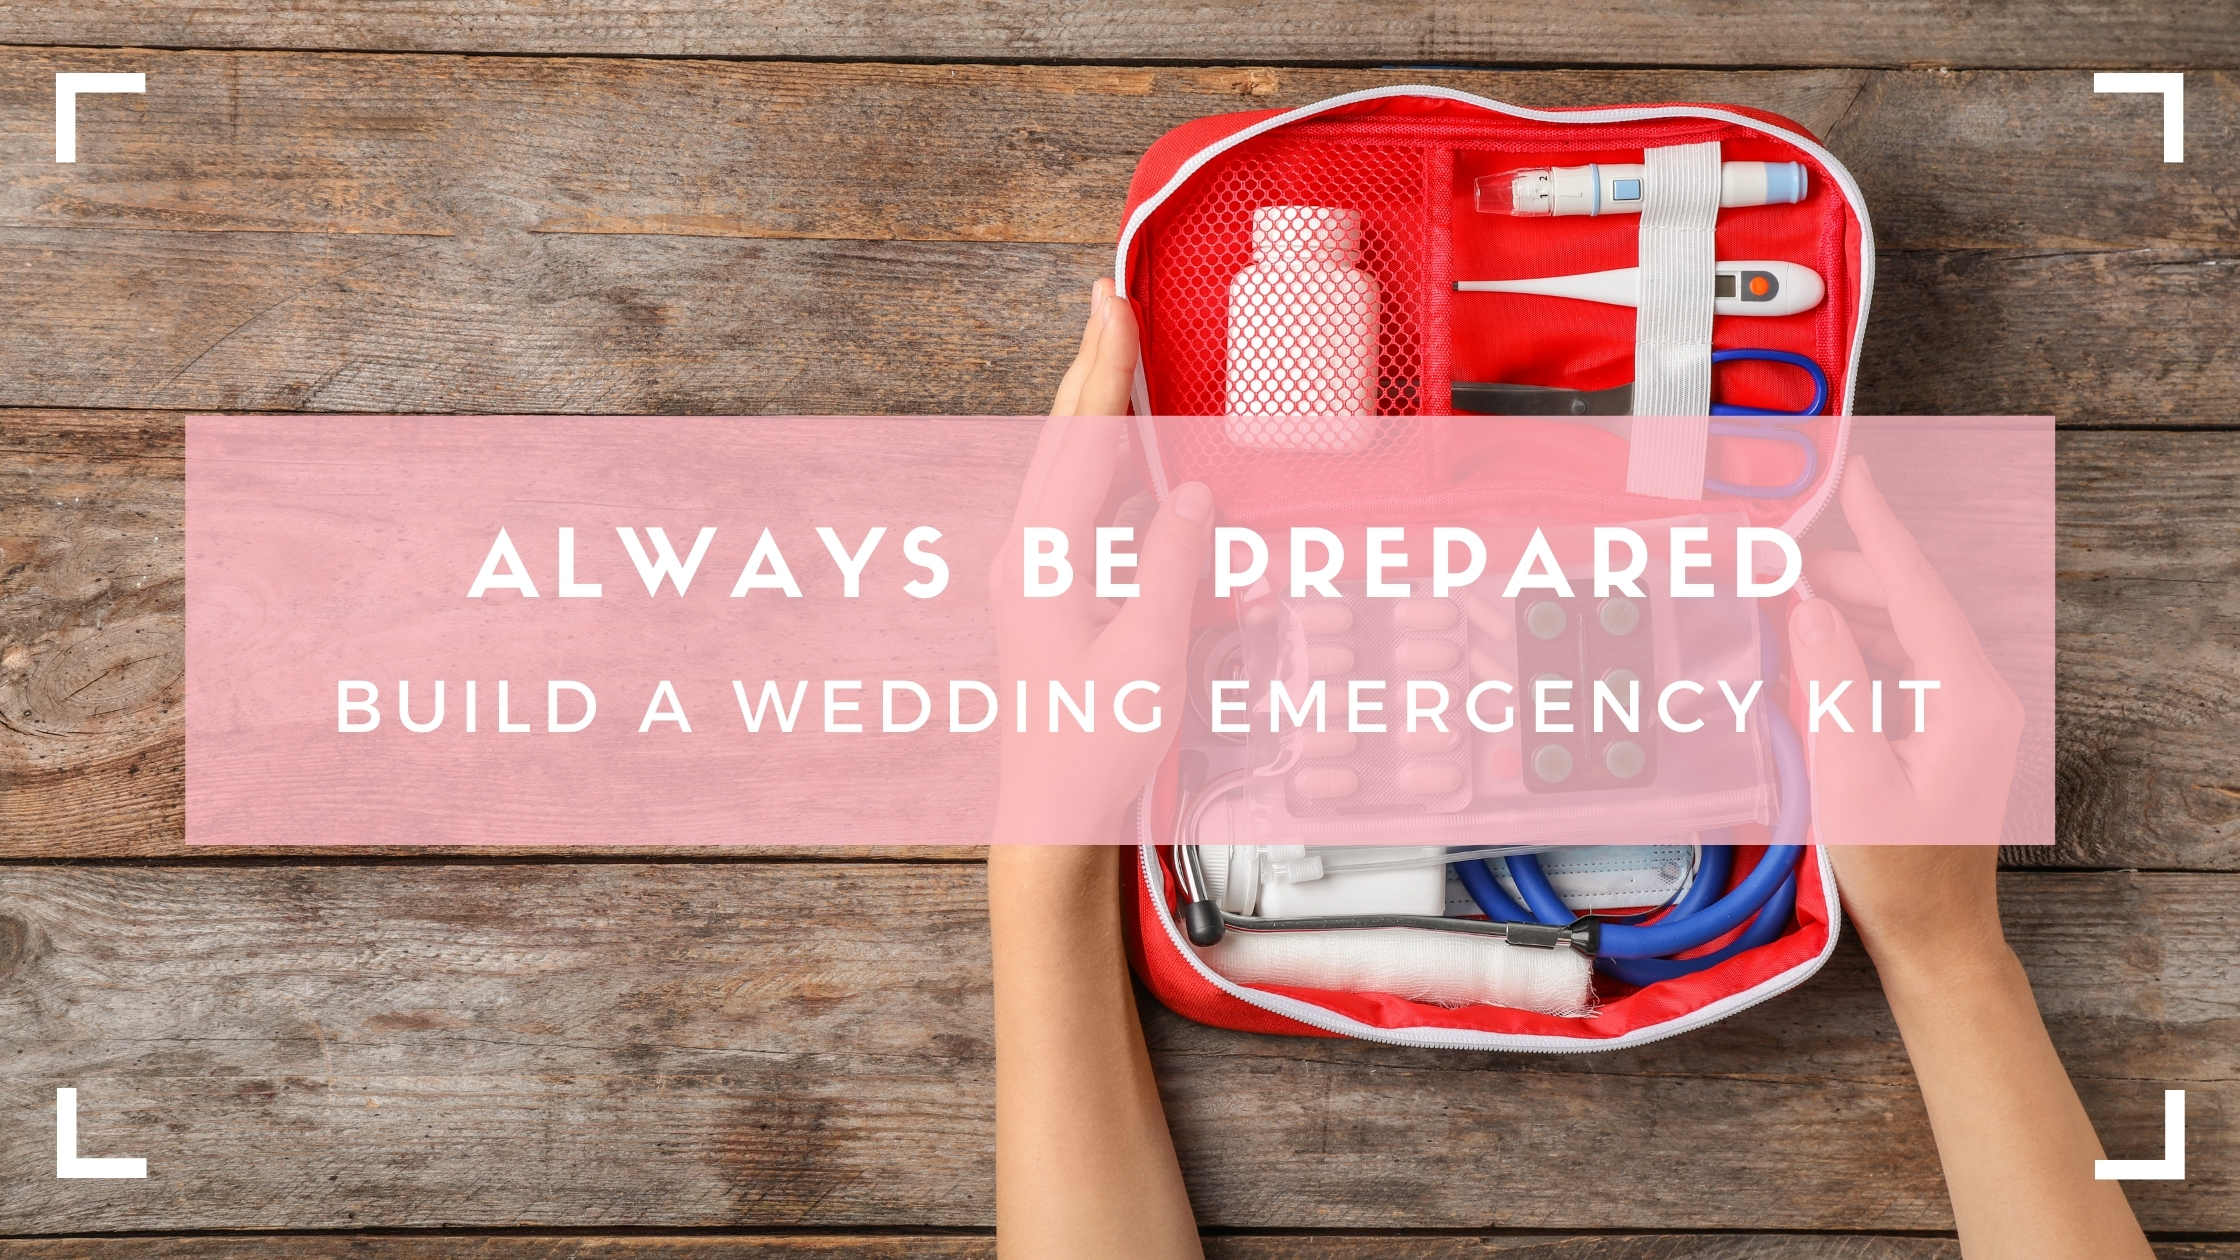 Kit de emergencia para organizadores de bodas cabecera del blog